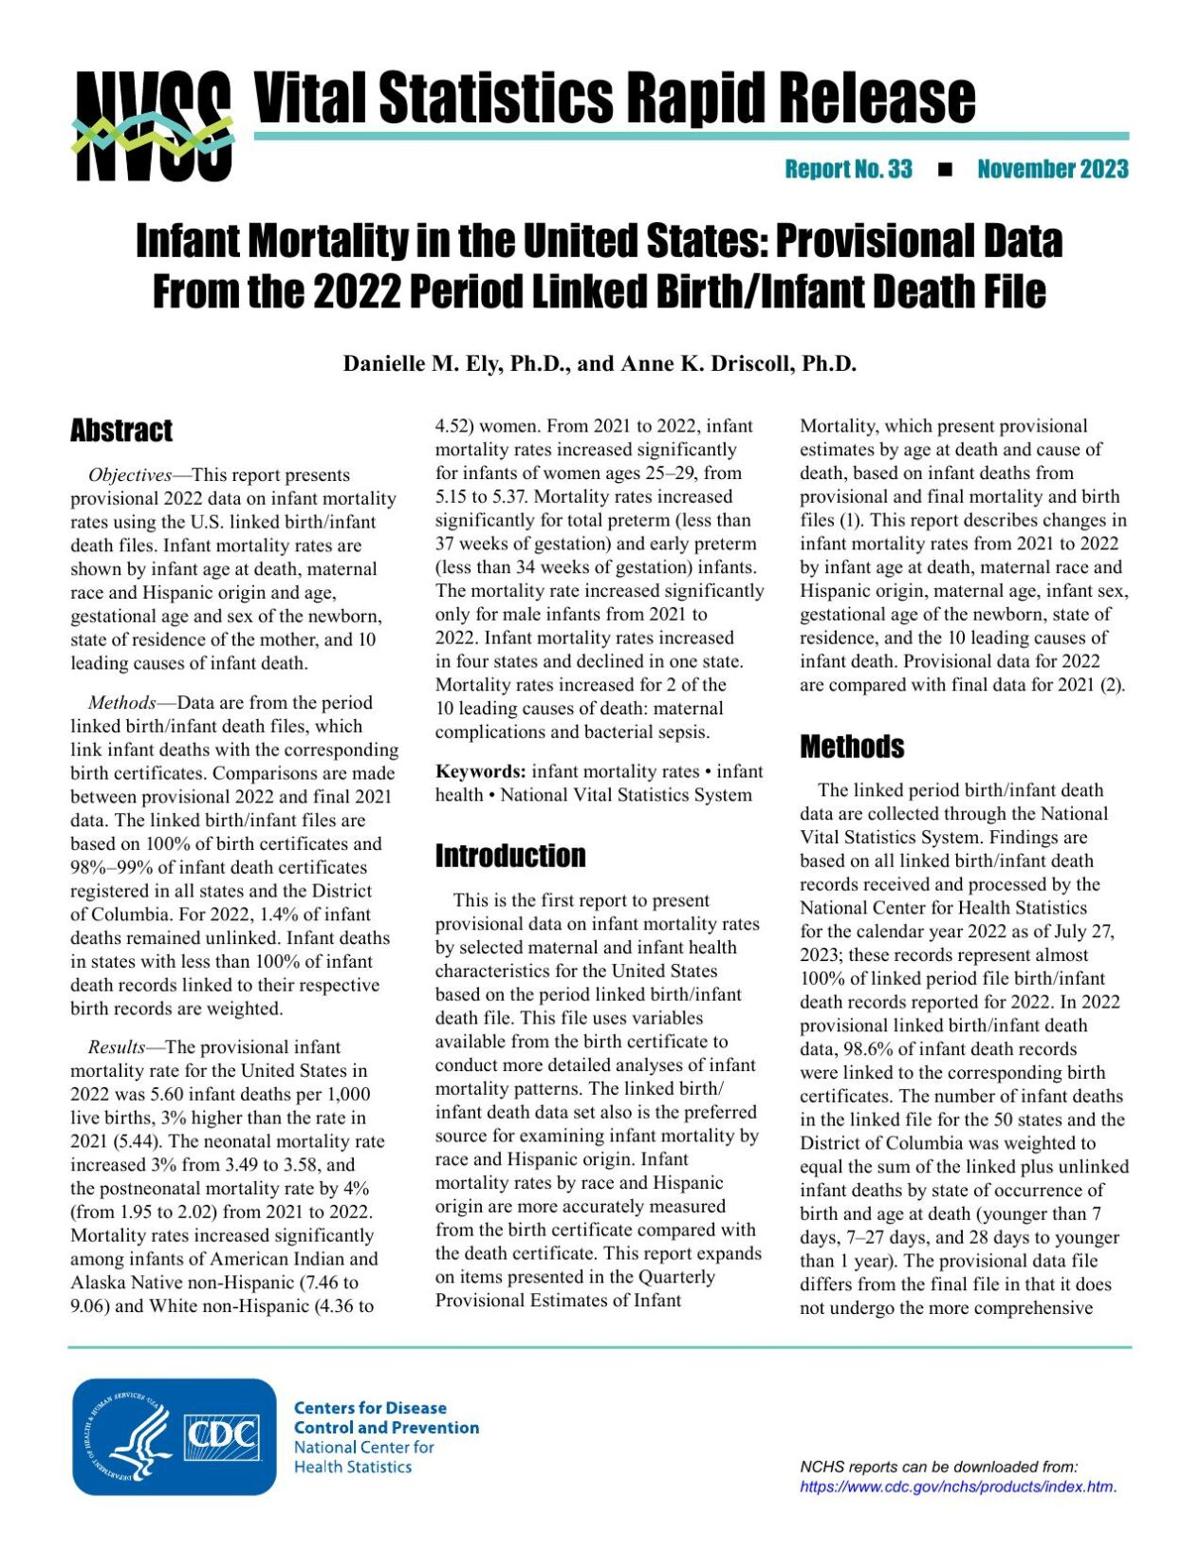 Infant mortality report